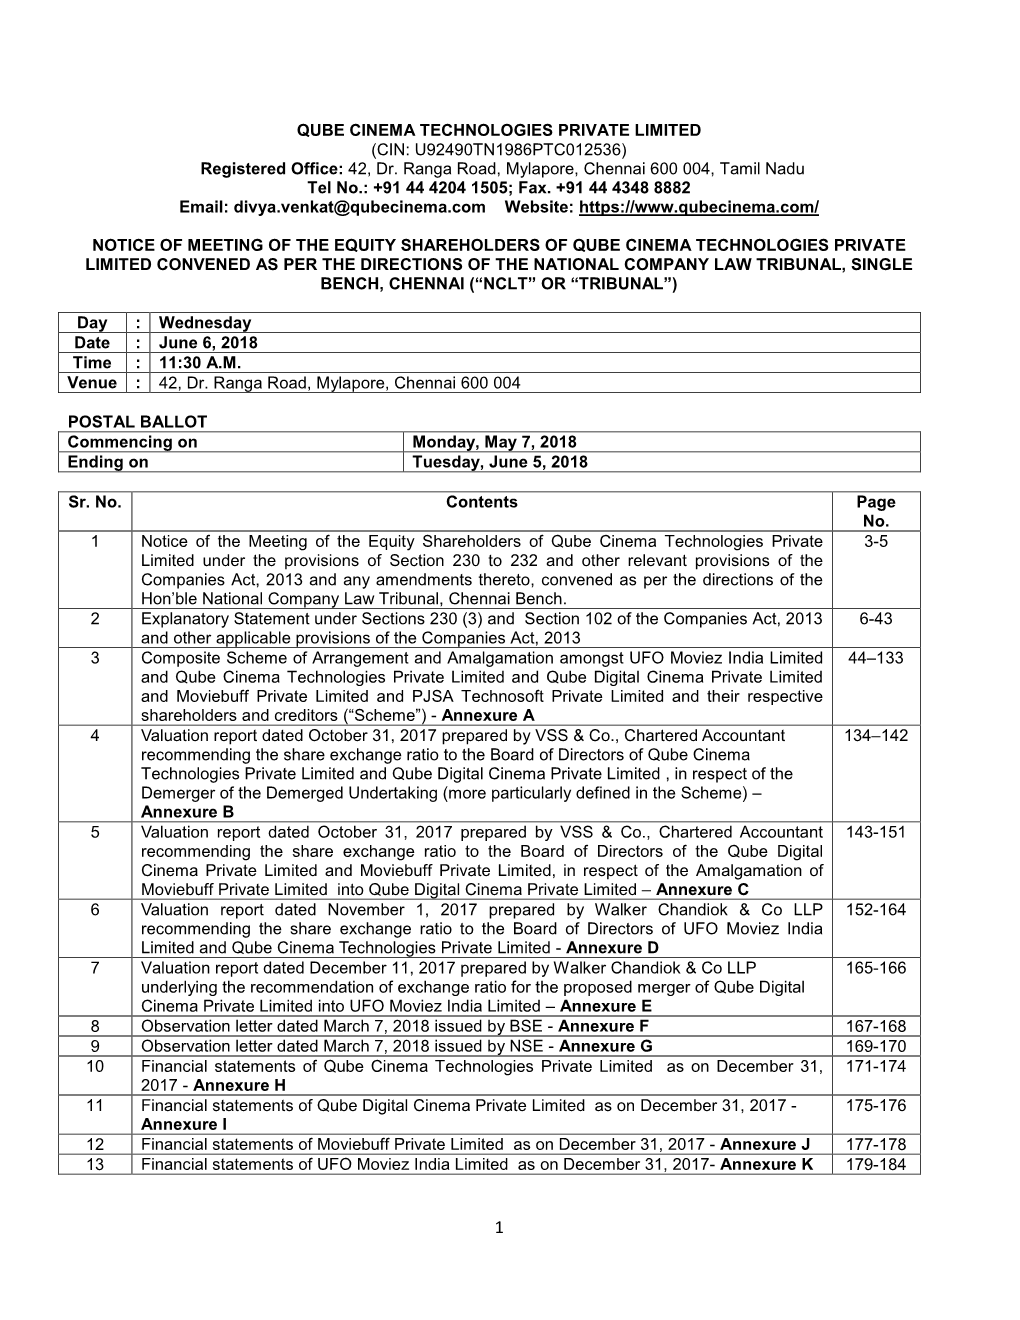 Registered Office: 42, Dr. Ranga Road, Mylapore, Chennai 600 004, Tamil Nadu Tel No.: +91 44 4204 1505; Fax